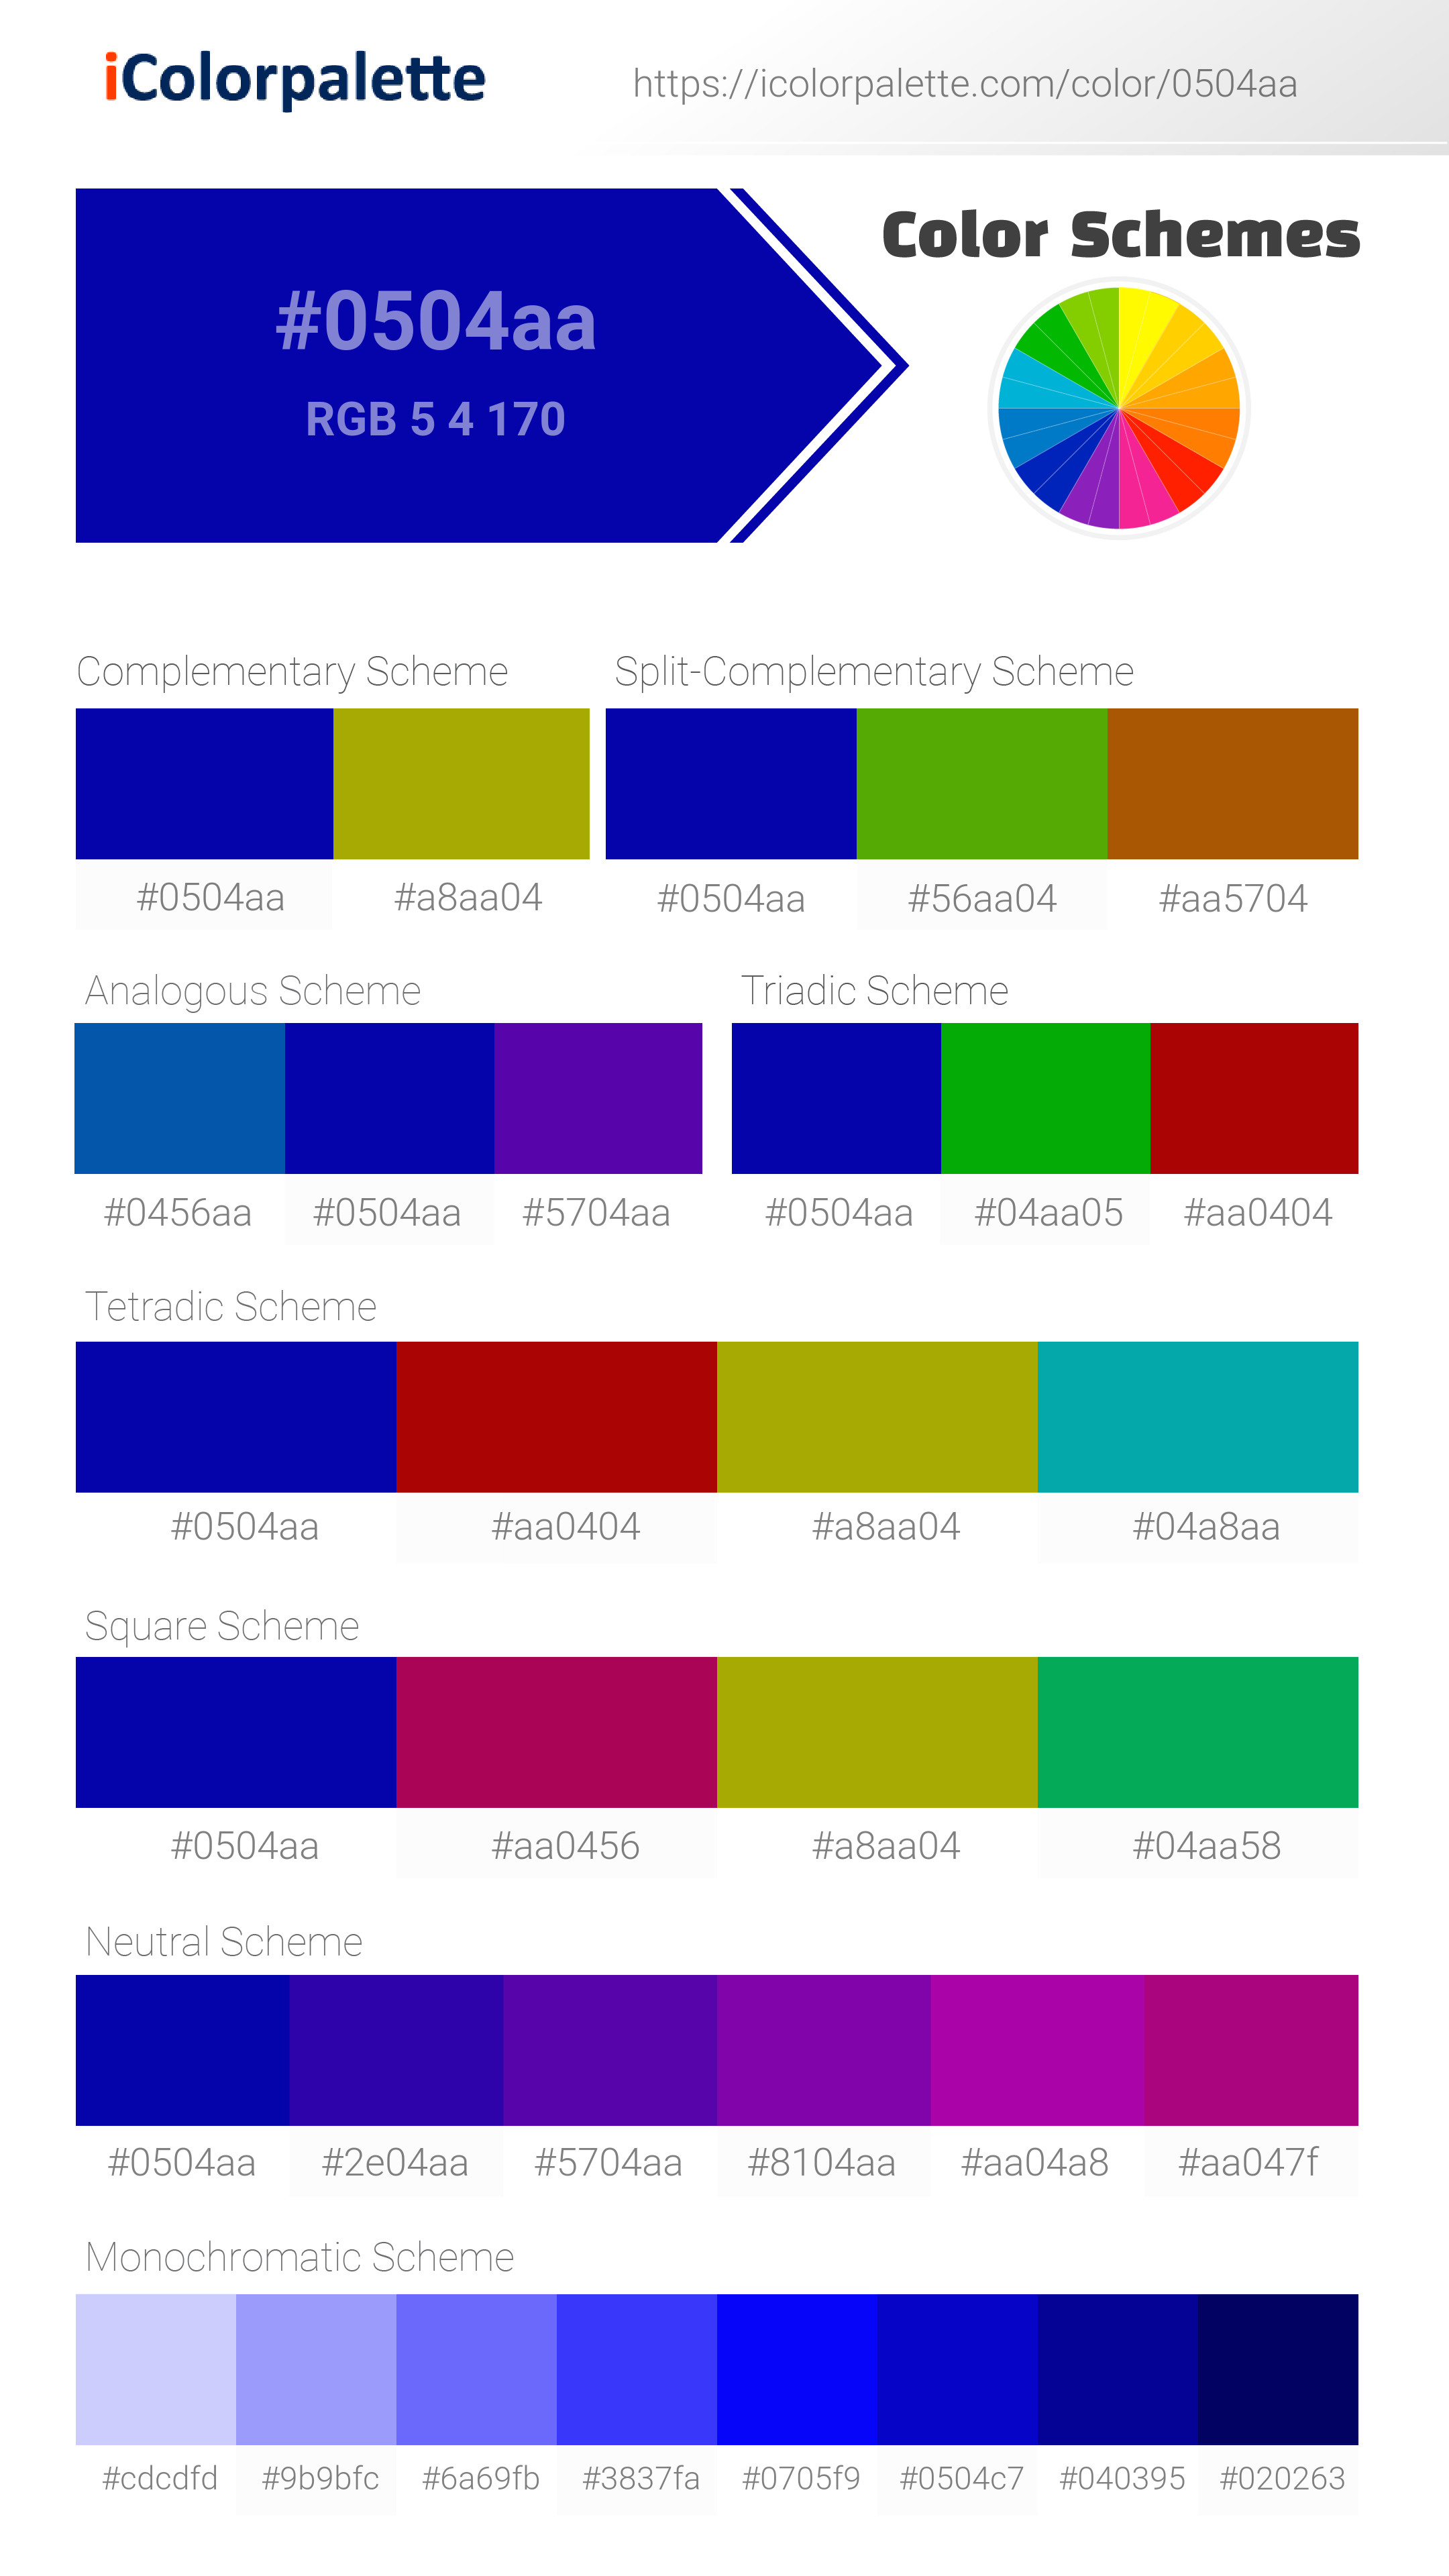 About Light Blue - Color codes, similar colors and paints 